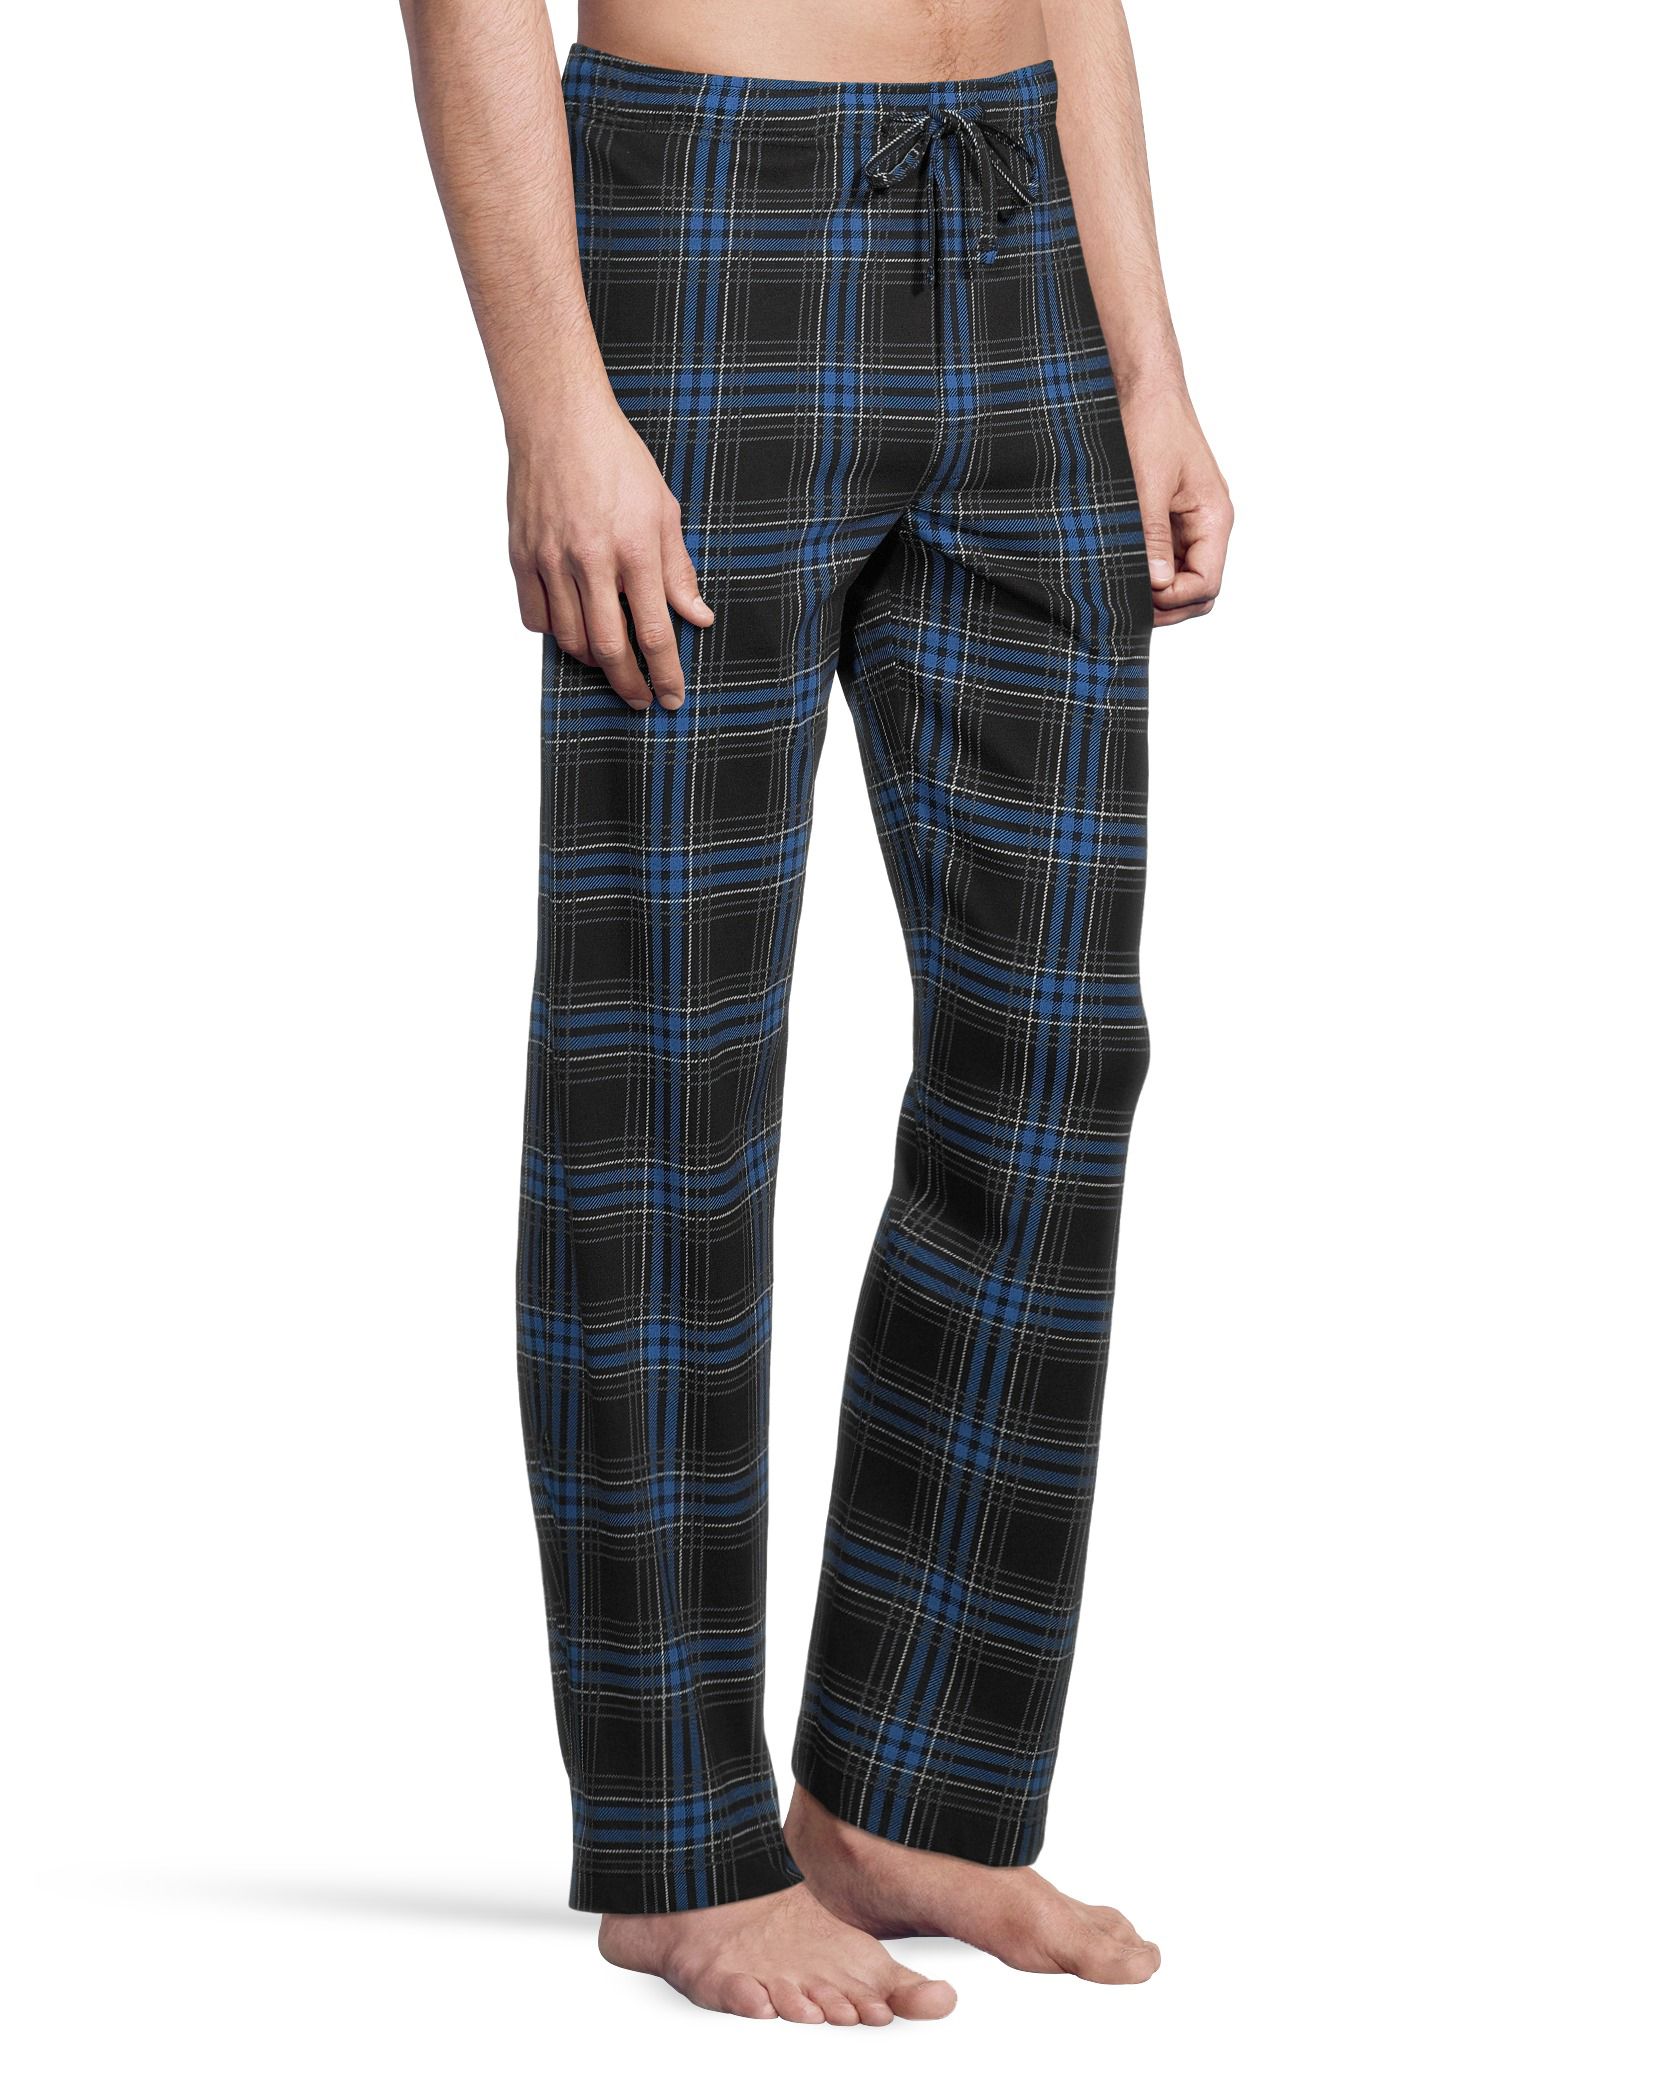 Buffalo Plaid Men's Jersey Pajama Pants